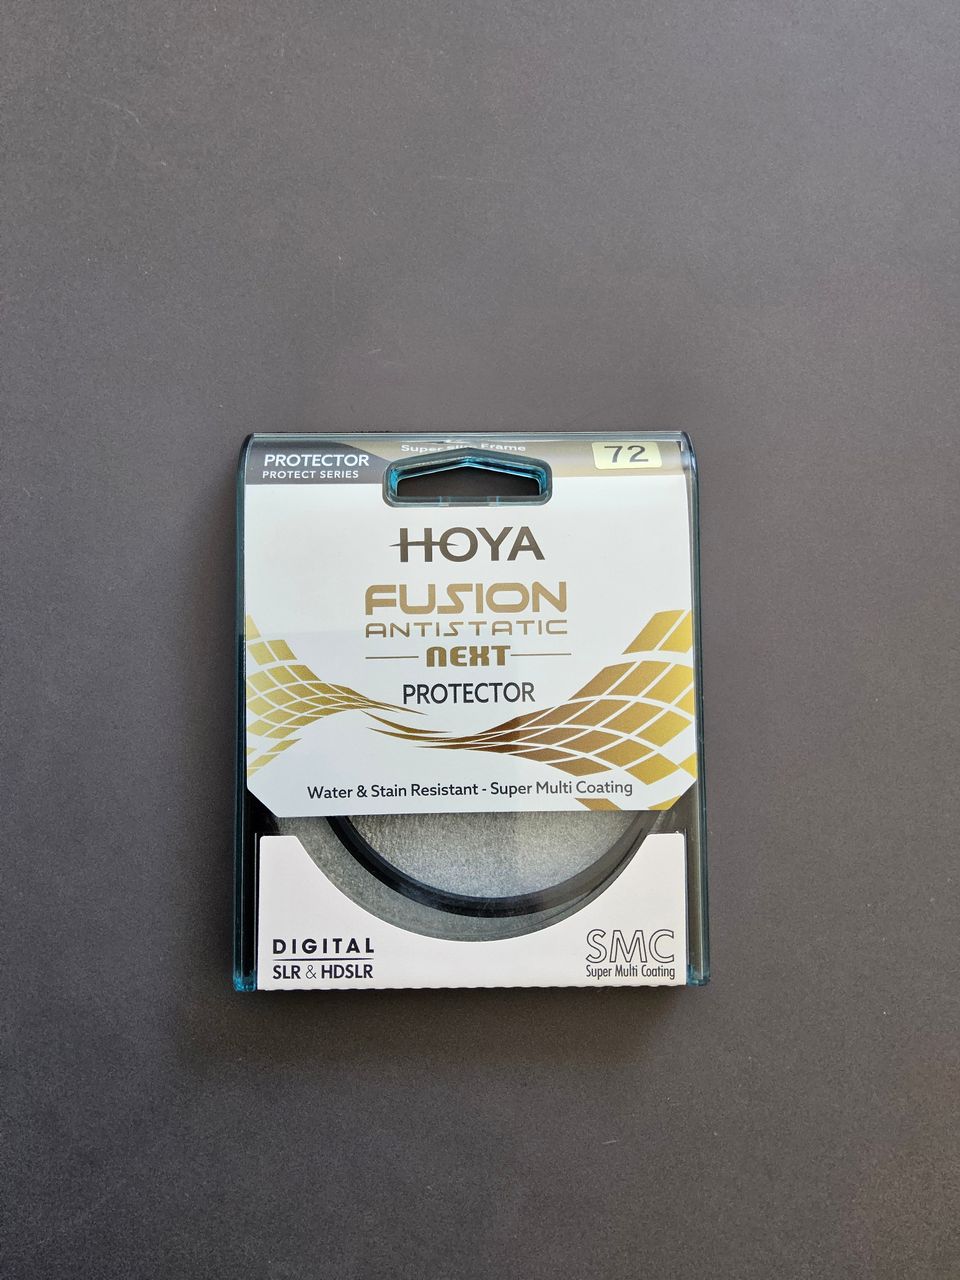 Hoya Fusion Antistatic Next 72mm